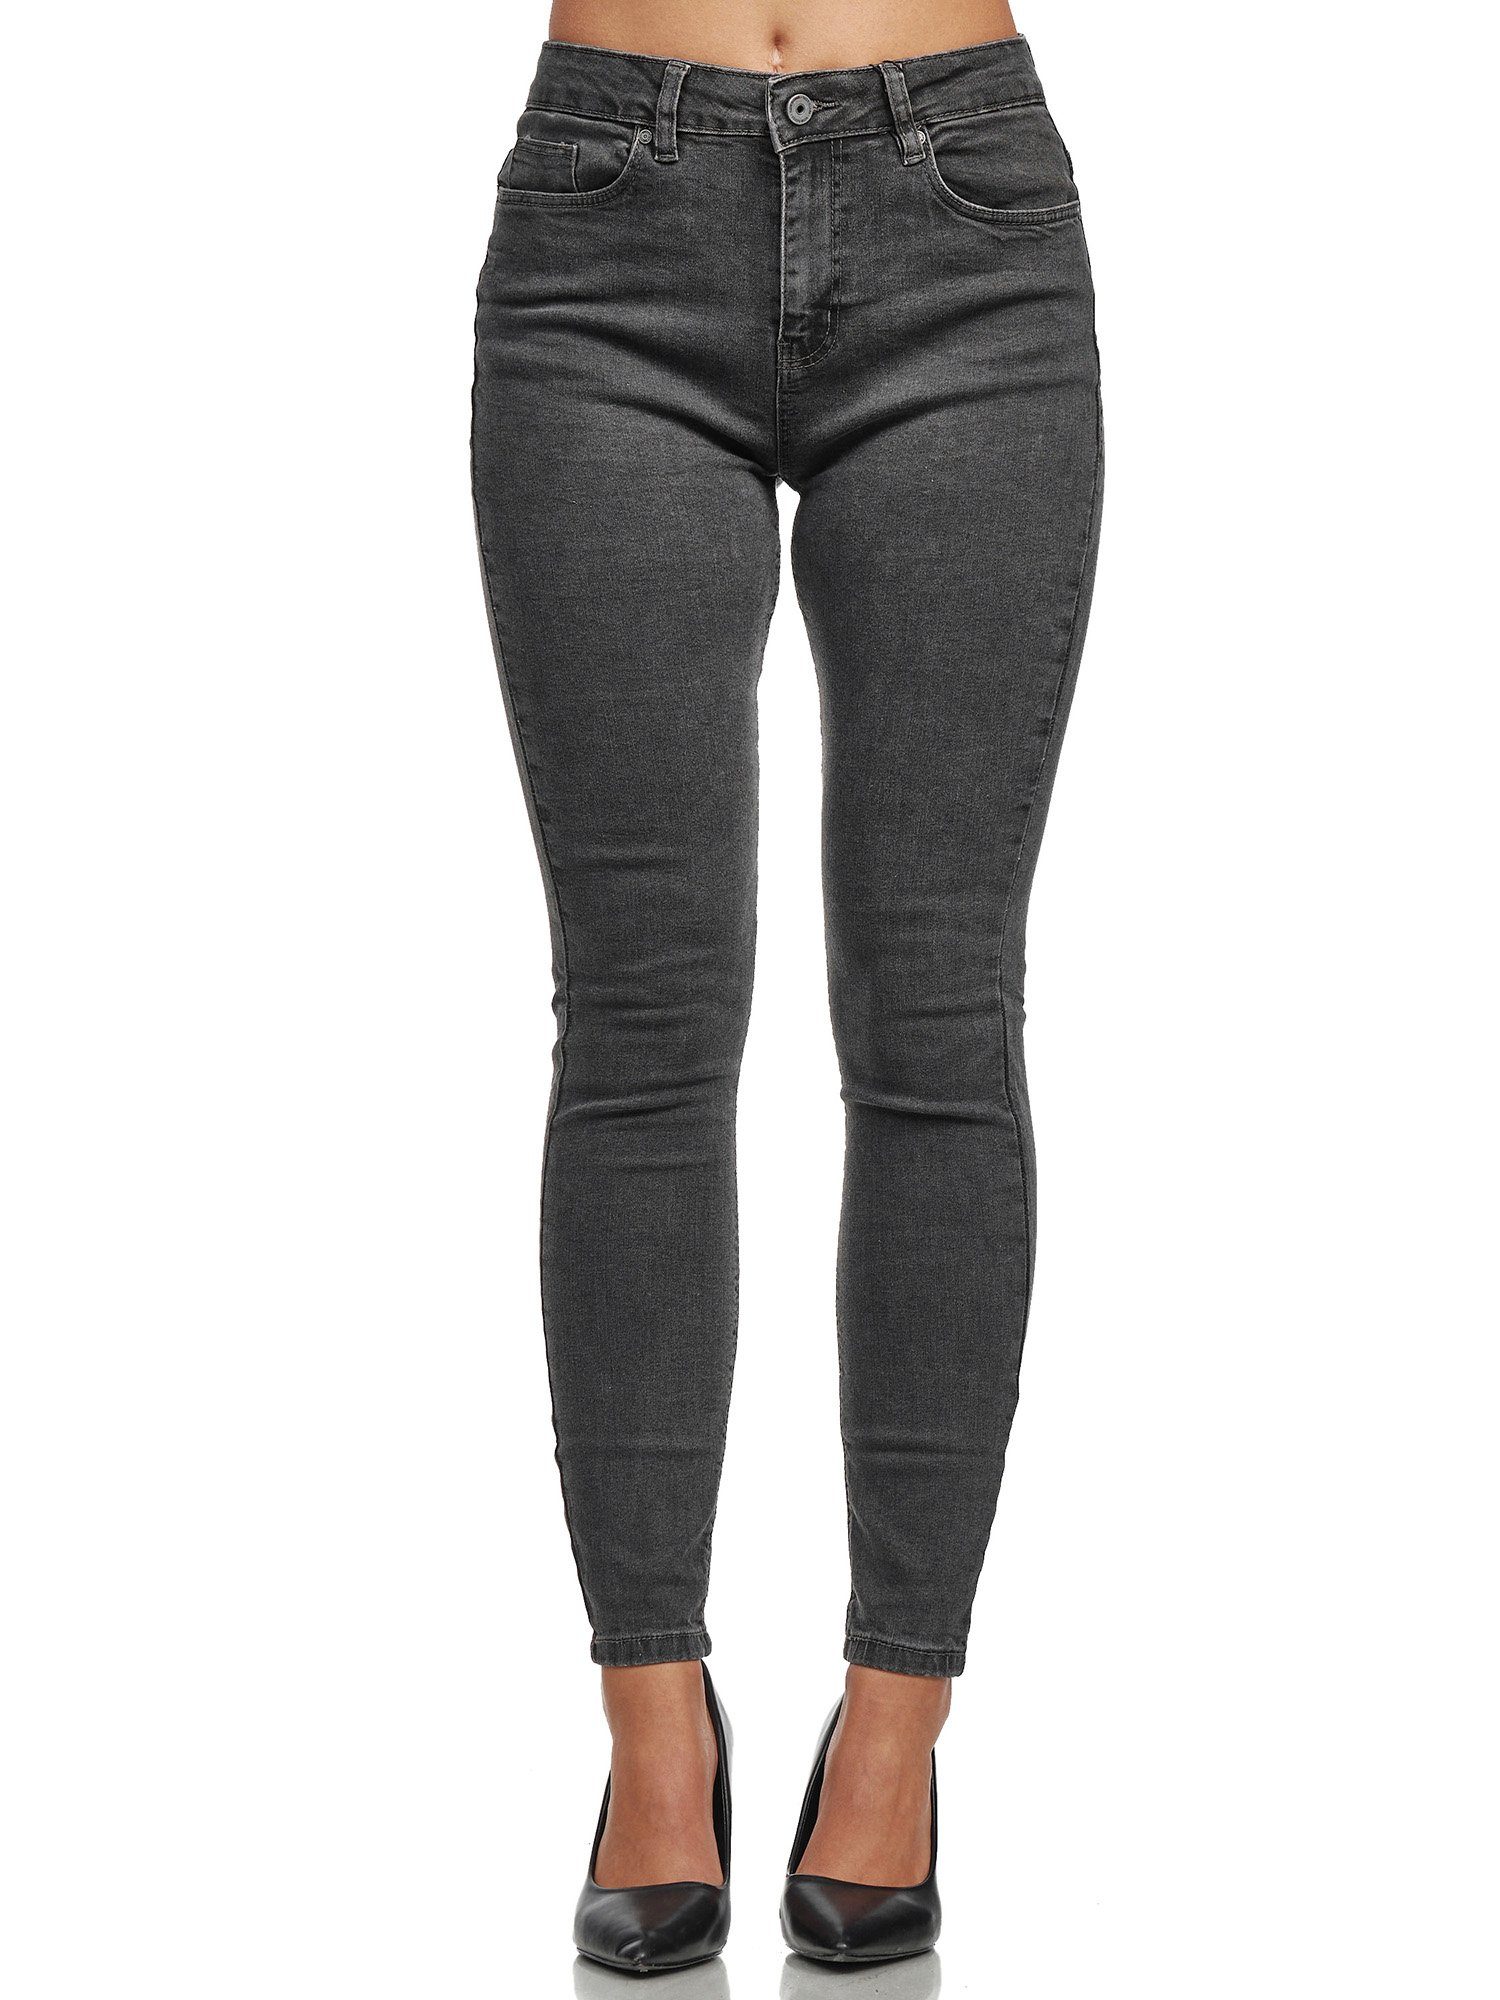 Fit Damen F101 anthrazit Tazzio High-waist-Jeans Jeanshose Skinny